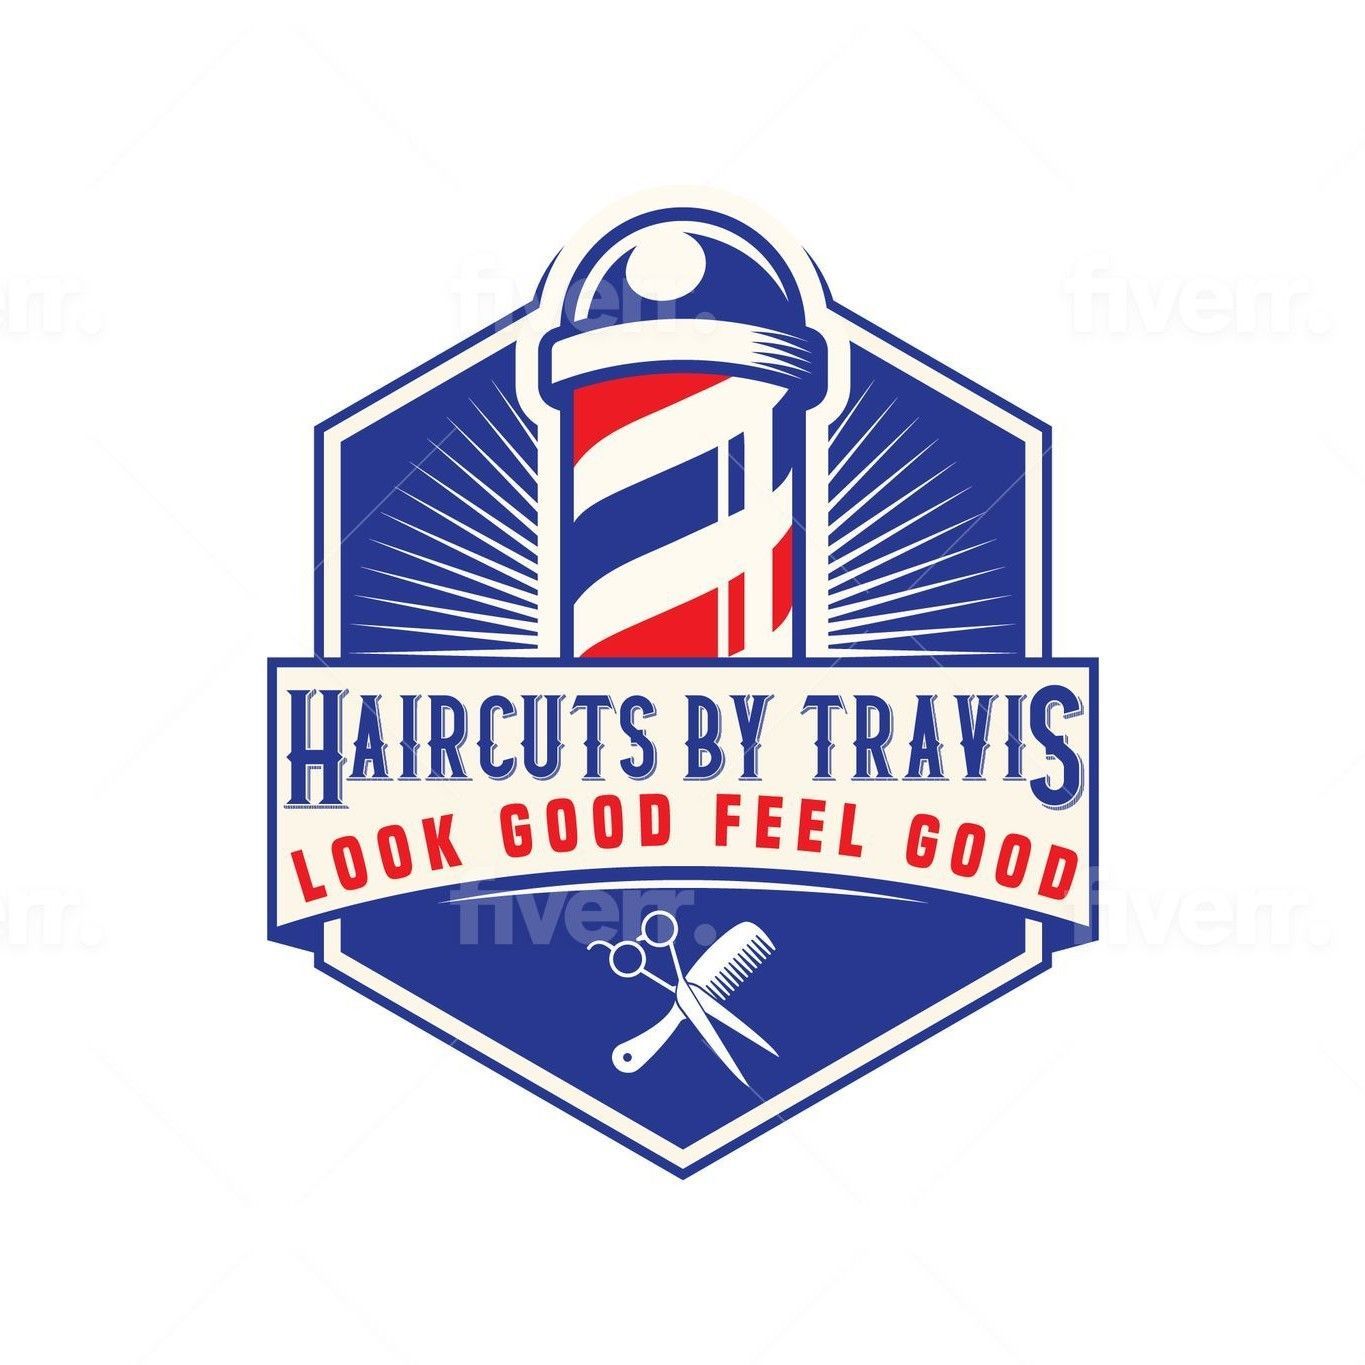 Haircuts by Travis, 2900 Delk Rd Suite 17, Marietta, GA 30067, Suite 9, Marietta, 30067